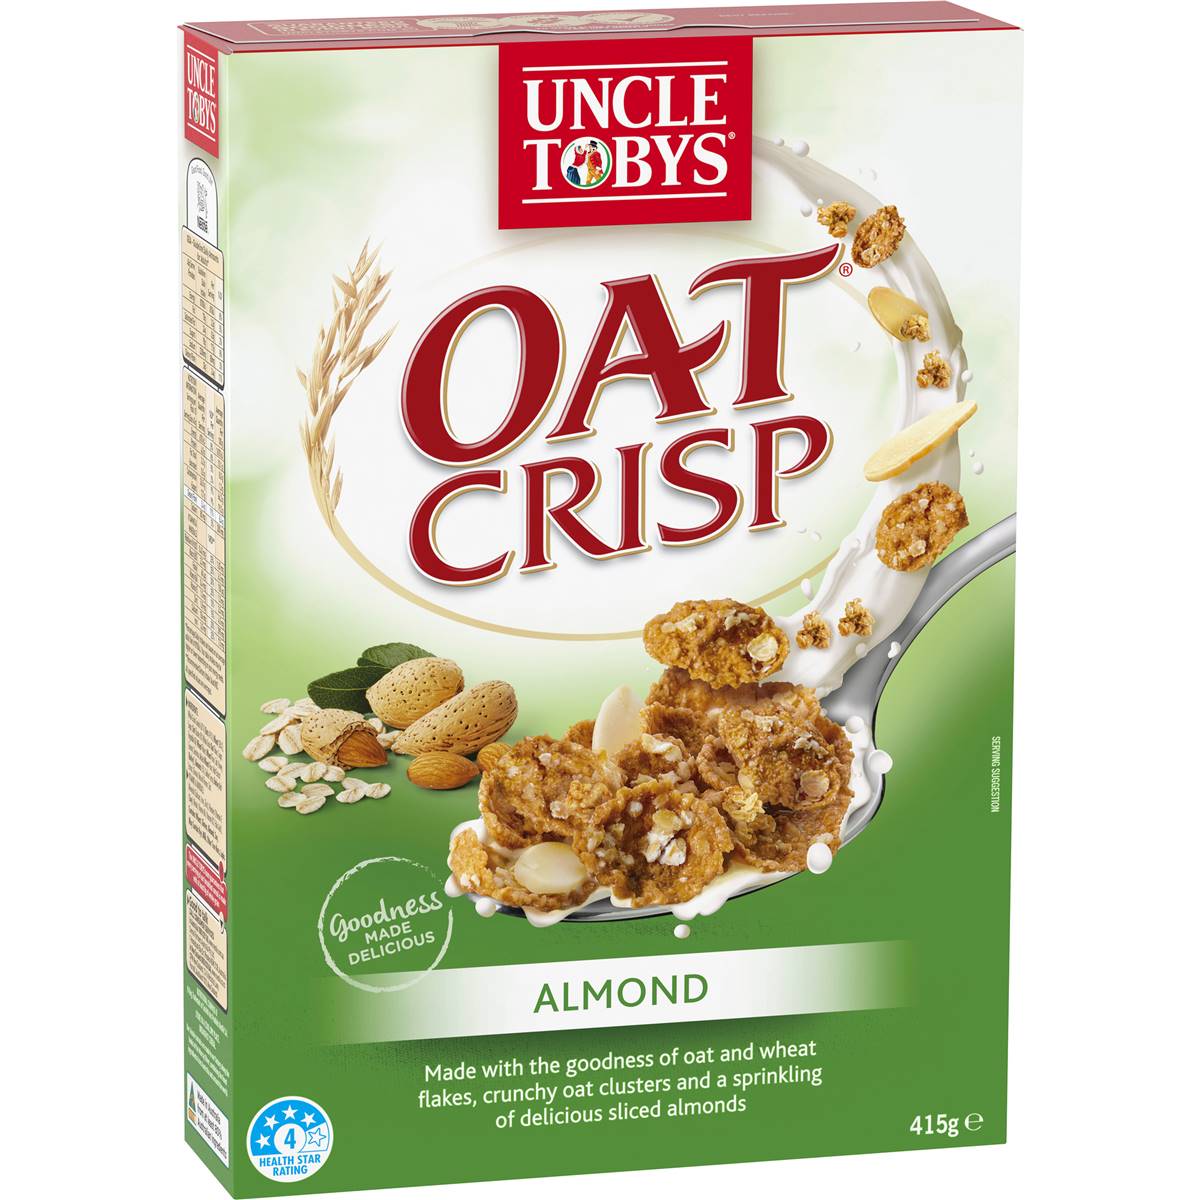 Calories in Uncle Tobys Oat Crisp Almond Breakfast Cereal